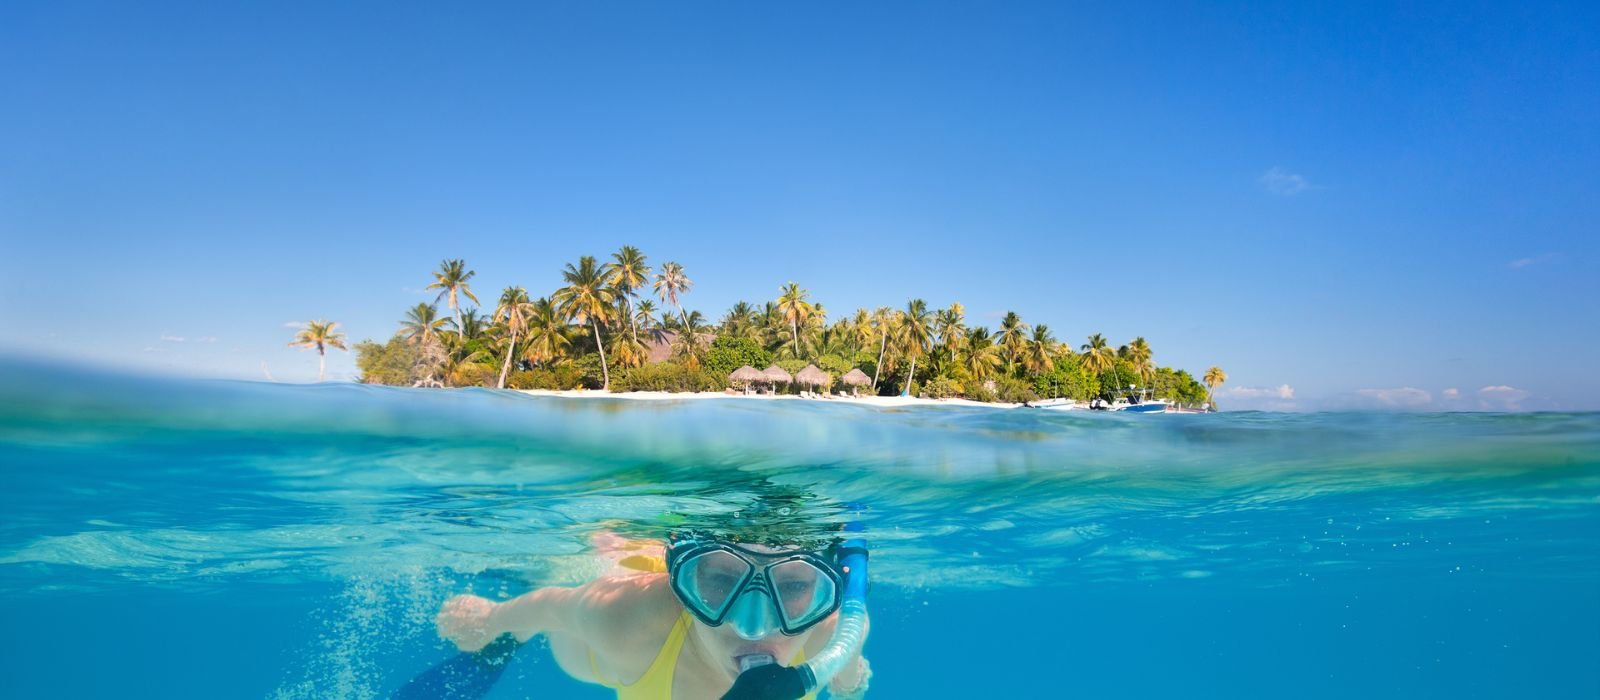 Snorkeling Spots In The Caribbean